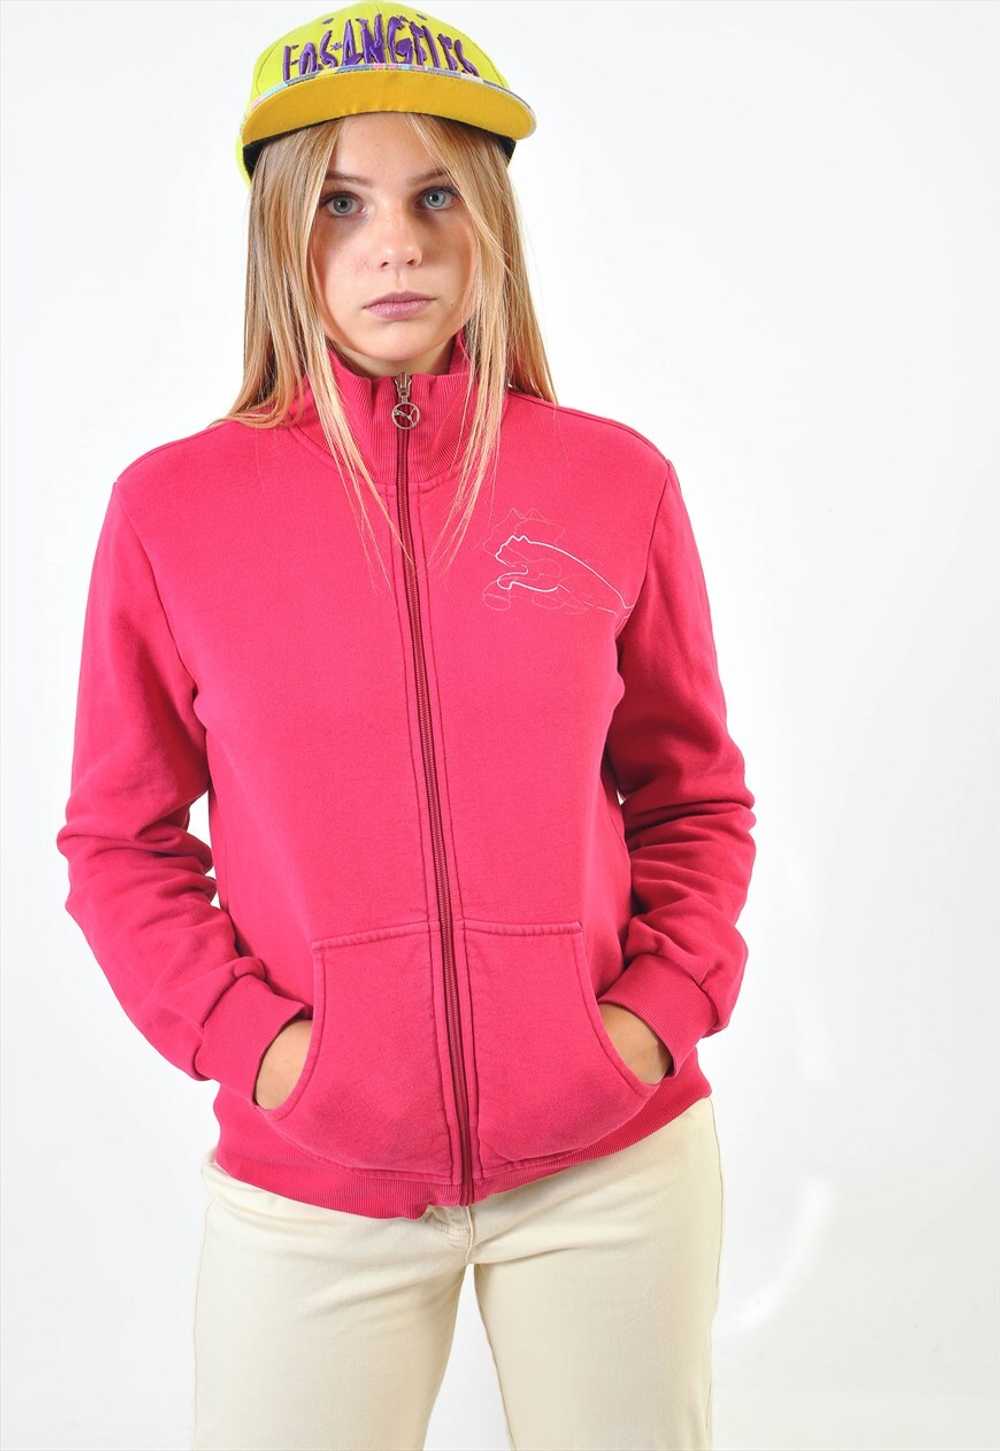 Vintage PUMA track jacket in pink - image 1